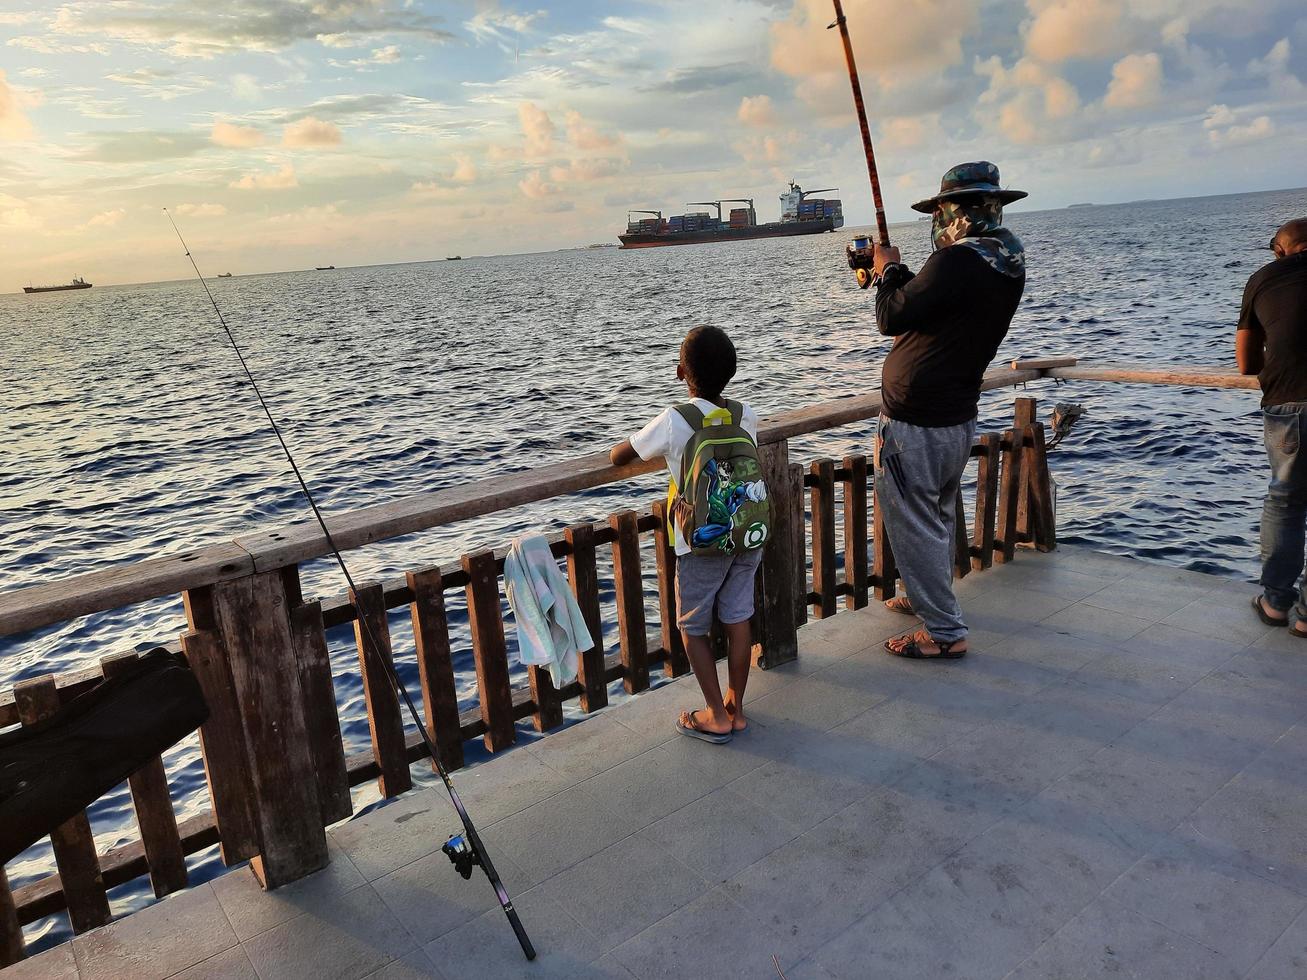 Male, Maldives, April 2021-People fishing on the beach photo